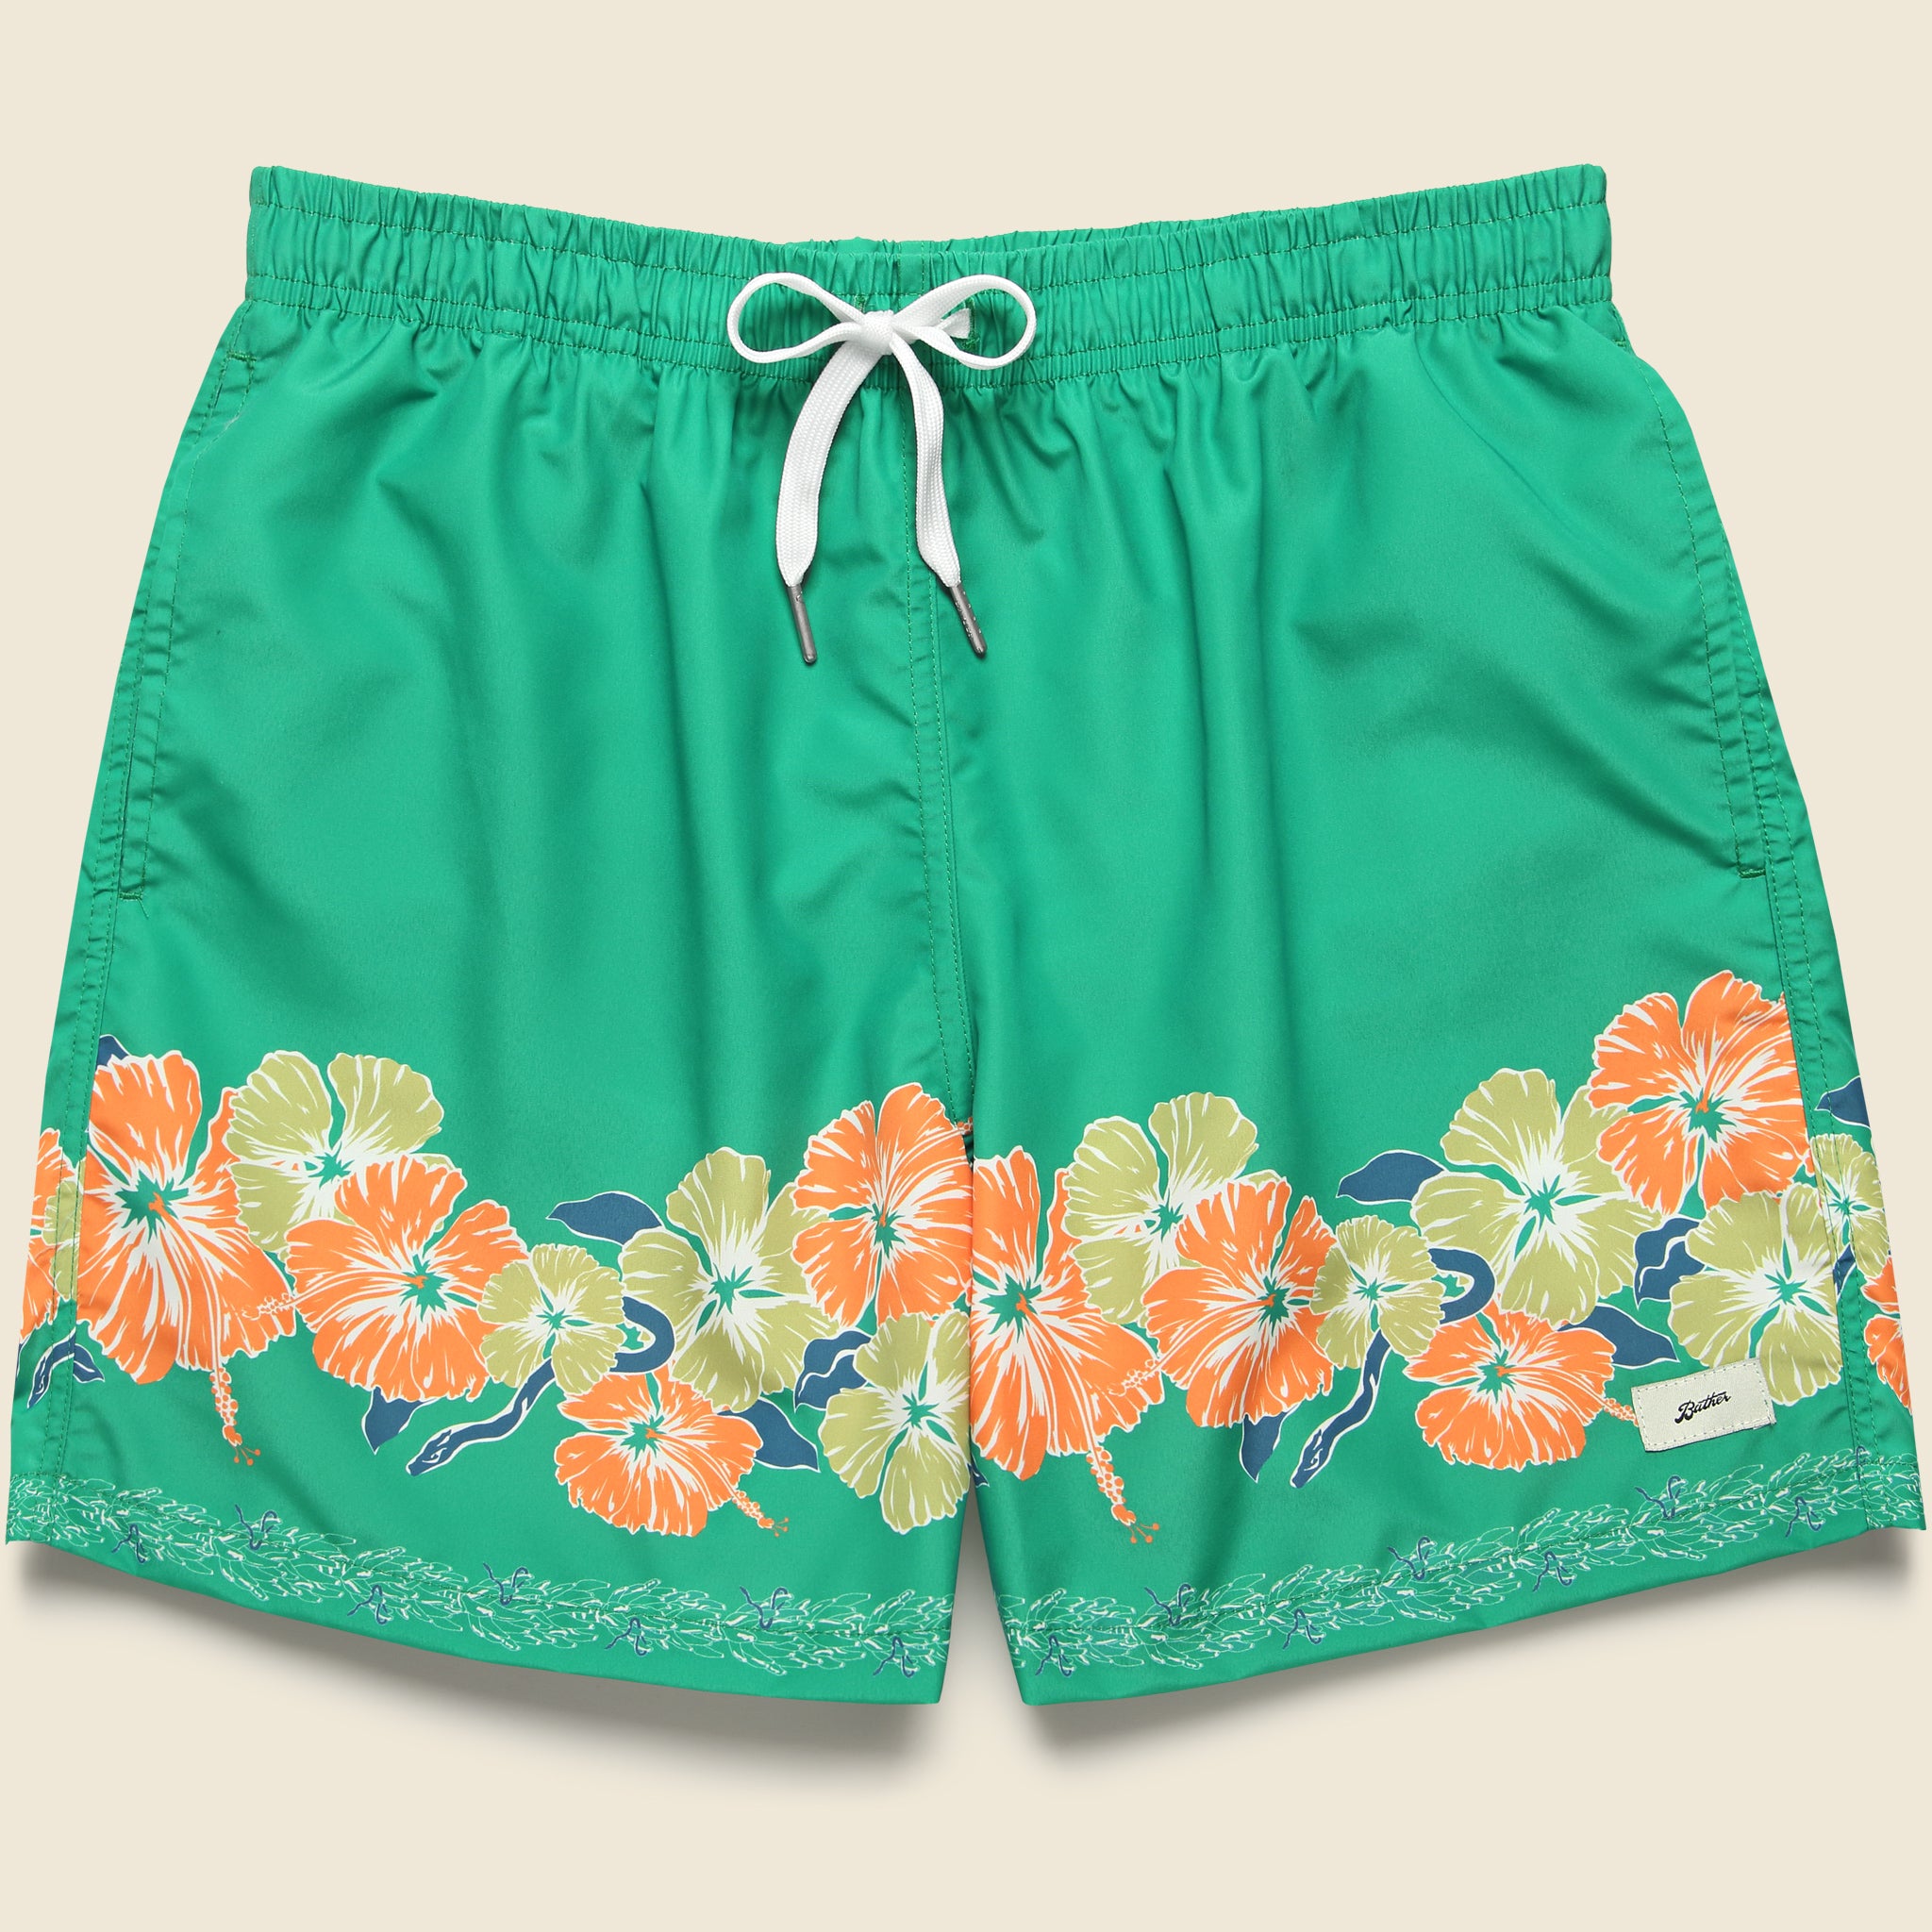 Ornate Bloom Swim Trunk - Moss - Bather - STAG Provisions - Shorts - Swim